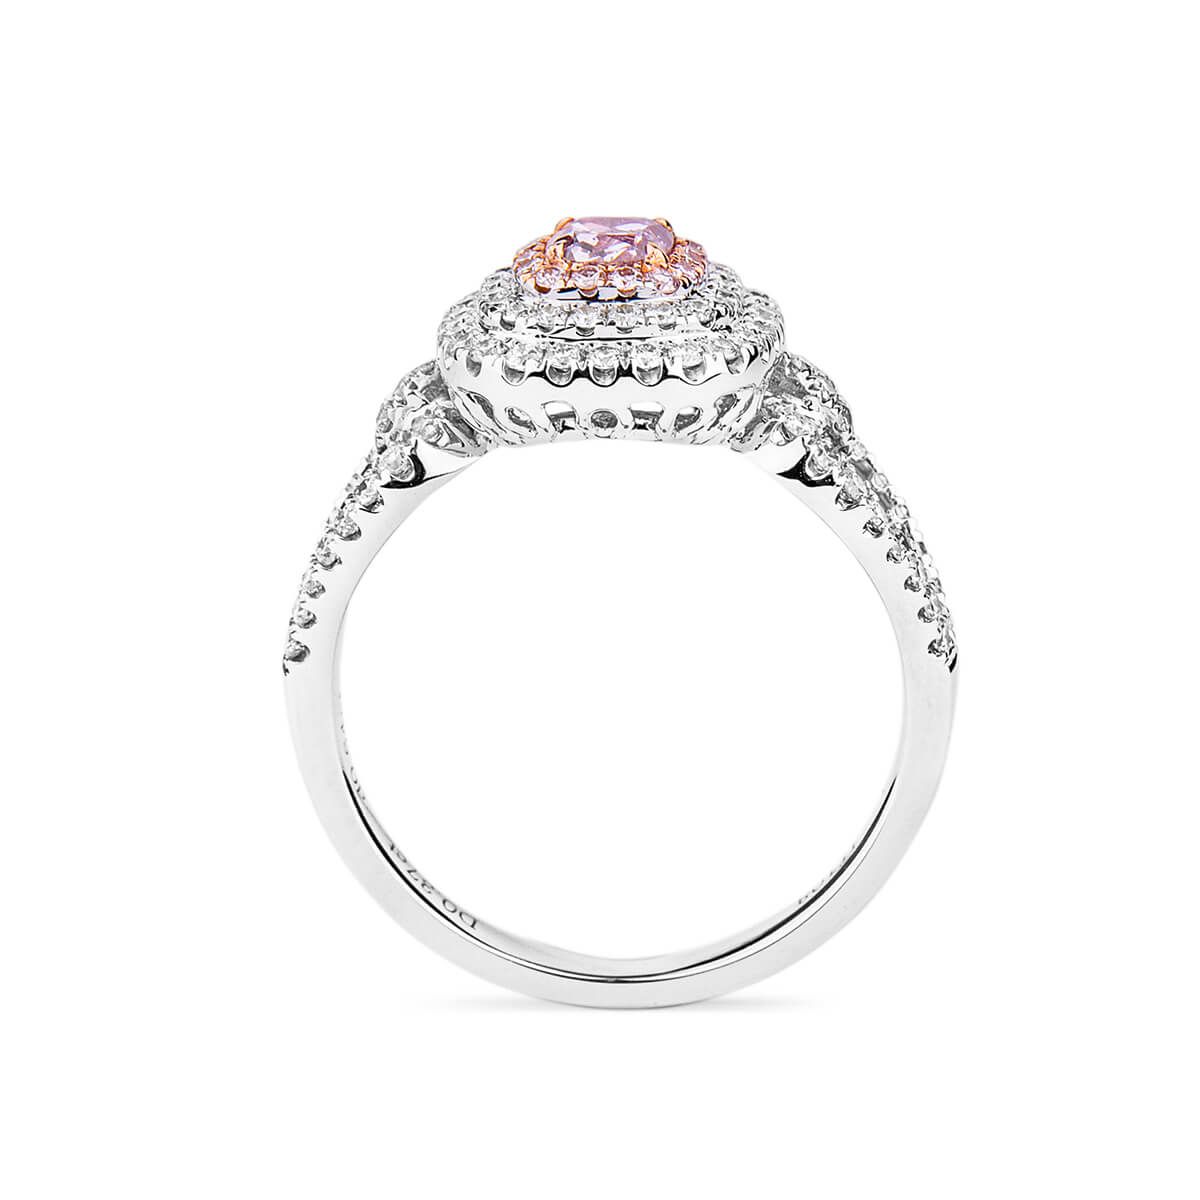 Fancy Pink Purple Diamond Ring, 0.37 Ct. (1.01 Ct. TW), Cushion shape, GIA Certified, 5182417510